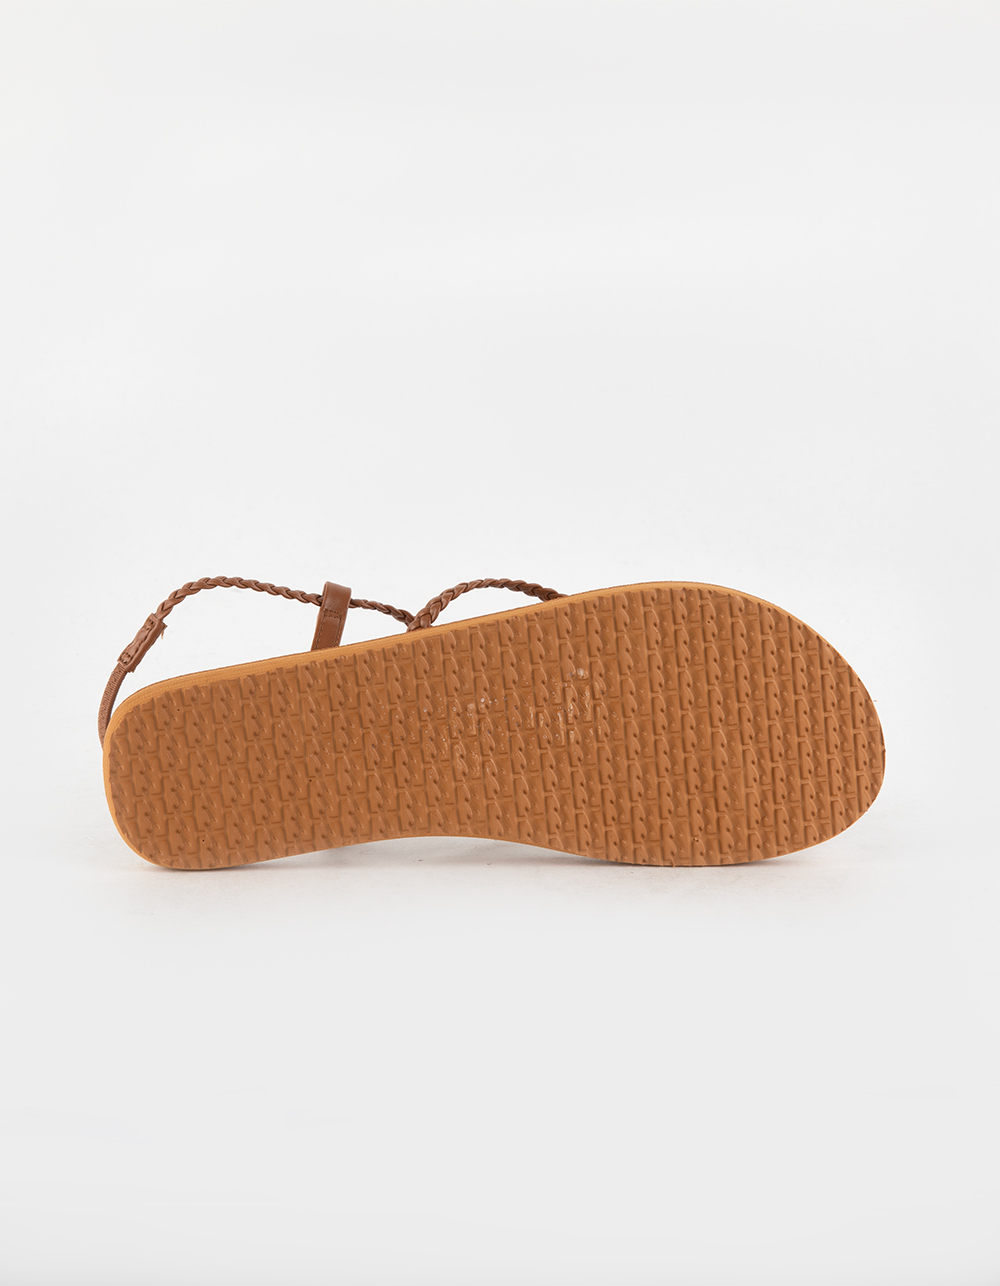 - Sandals Braided By COGNAC BILLABONG Crossing Tillys Womens |